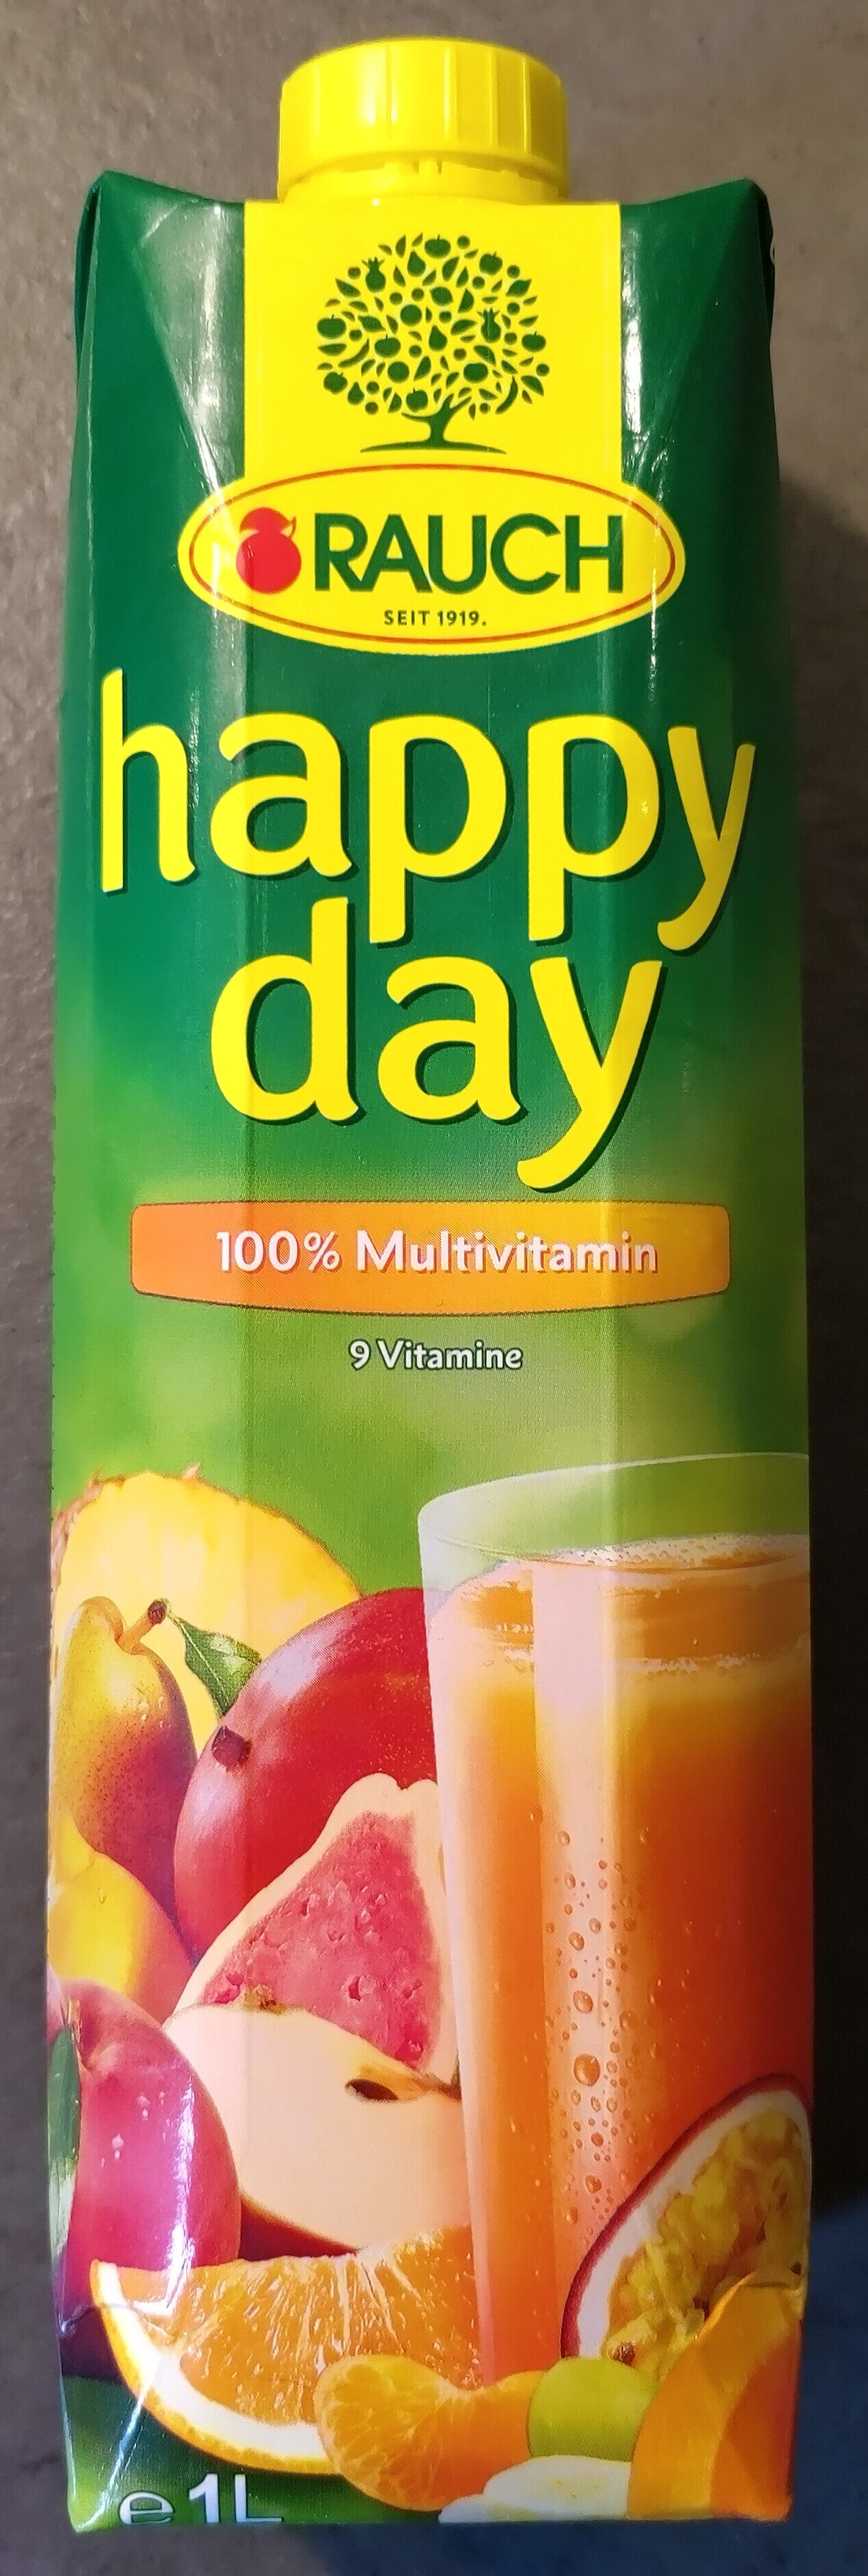 Happy Day Multivitamin - Product